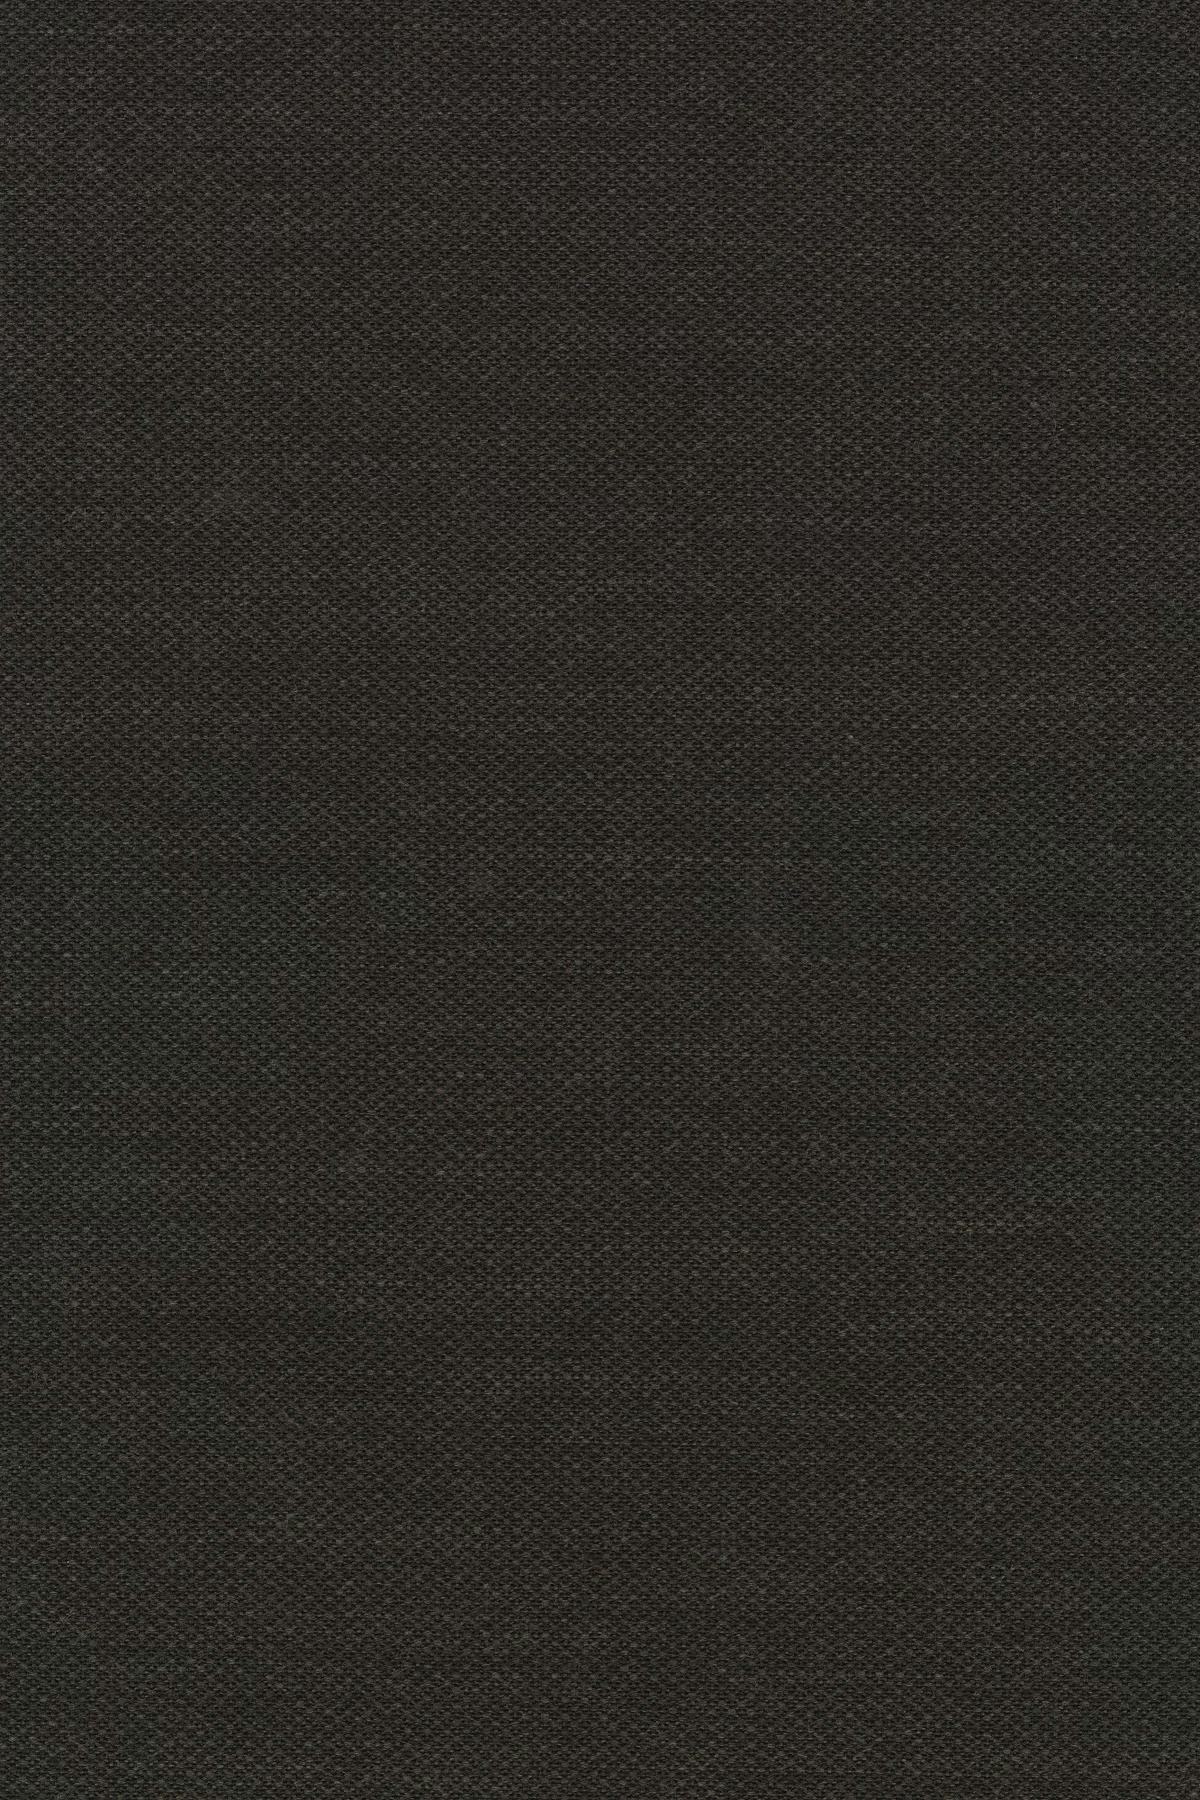 Fabric sample Fiord 391 grey